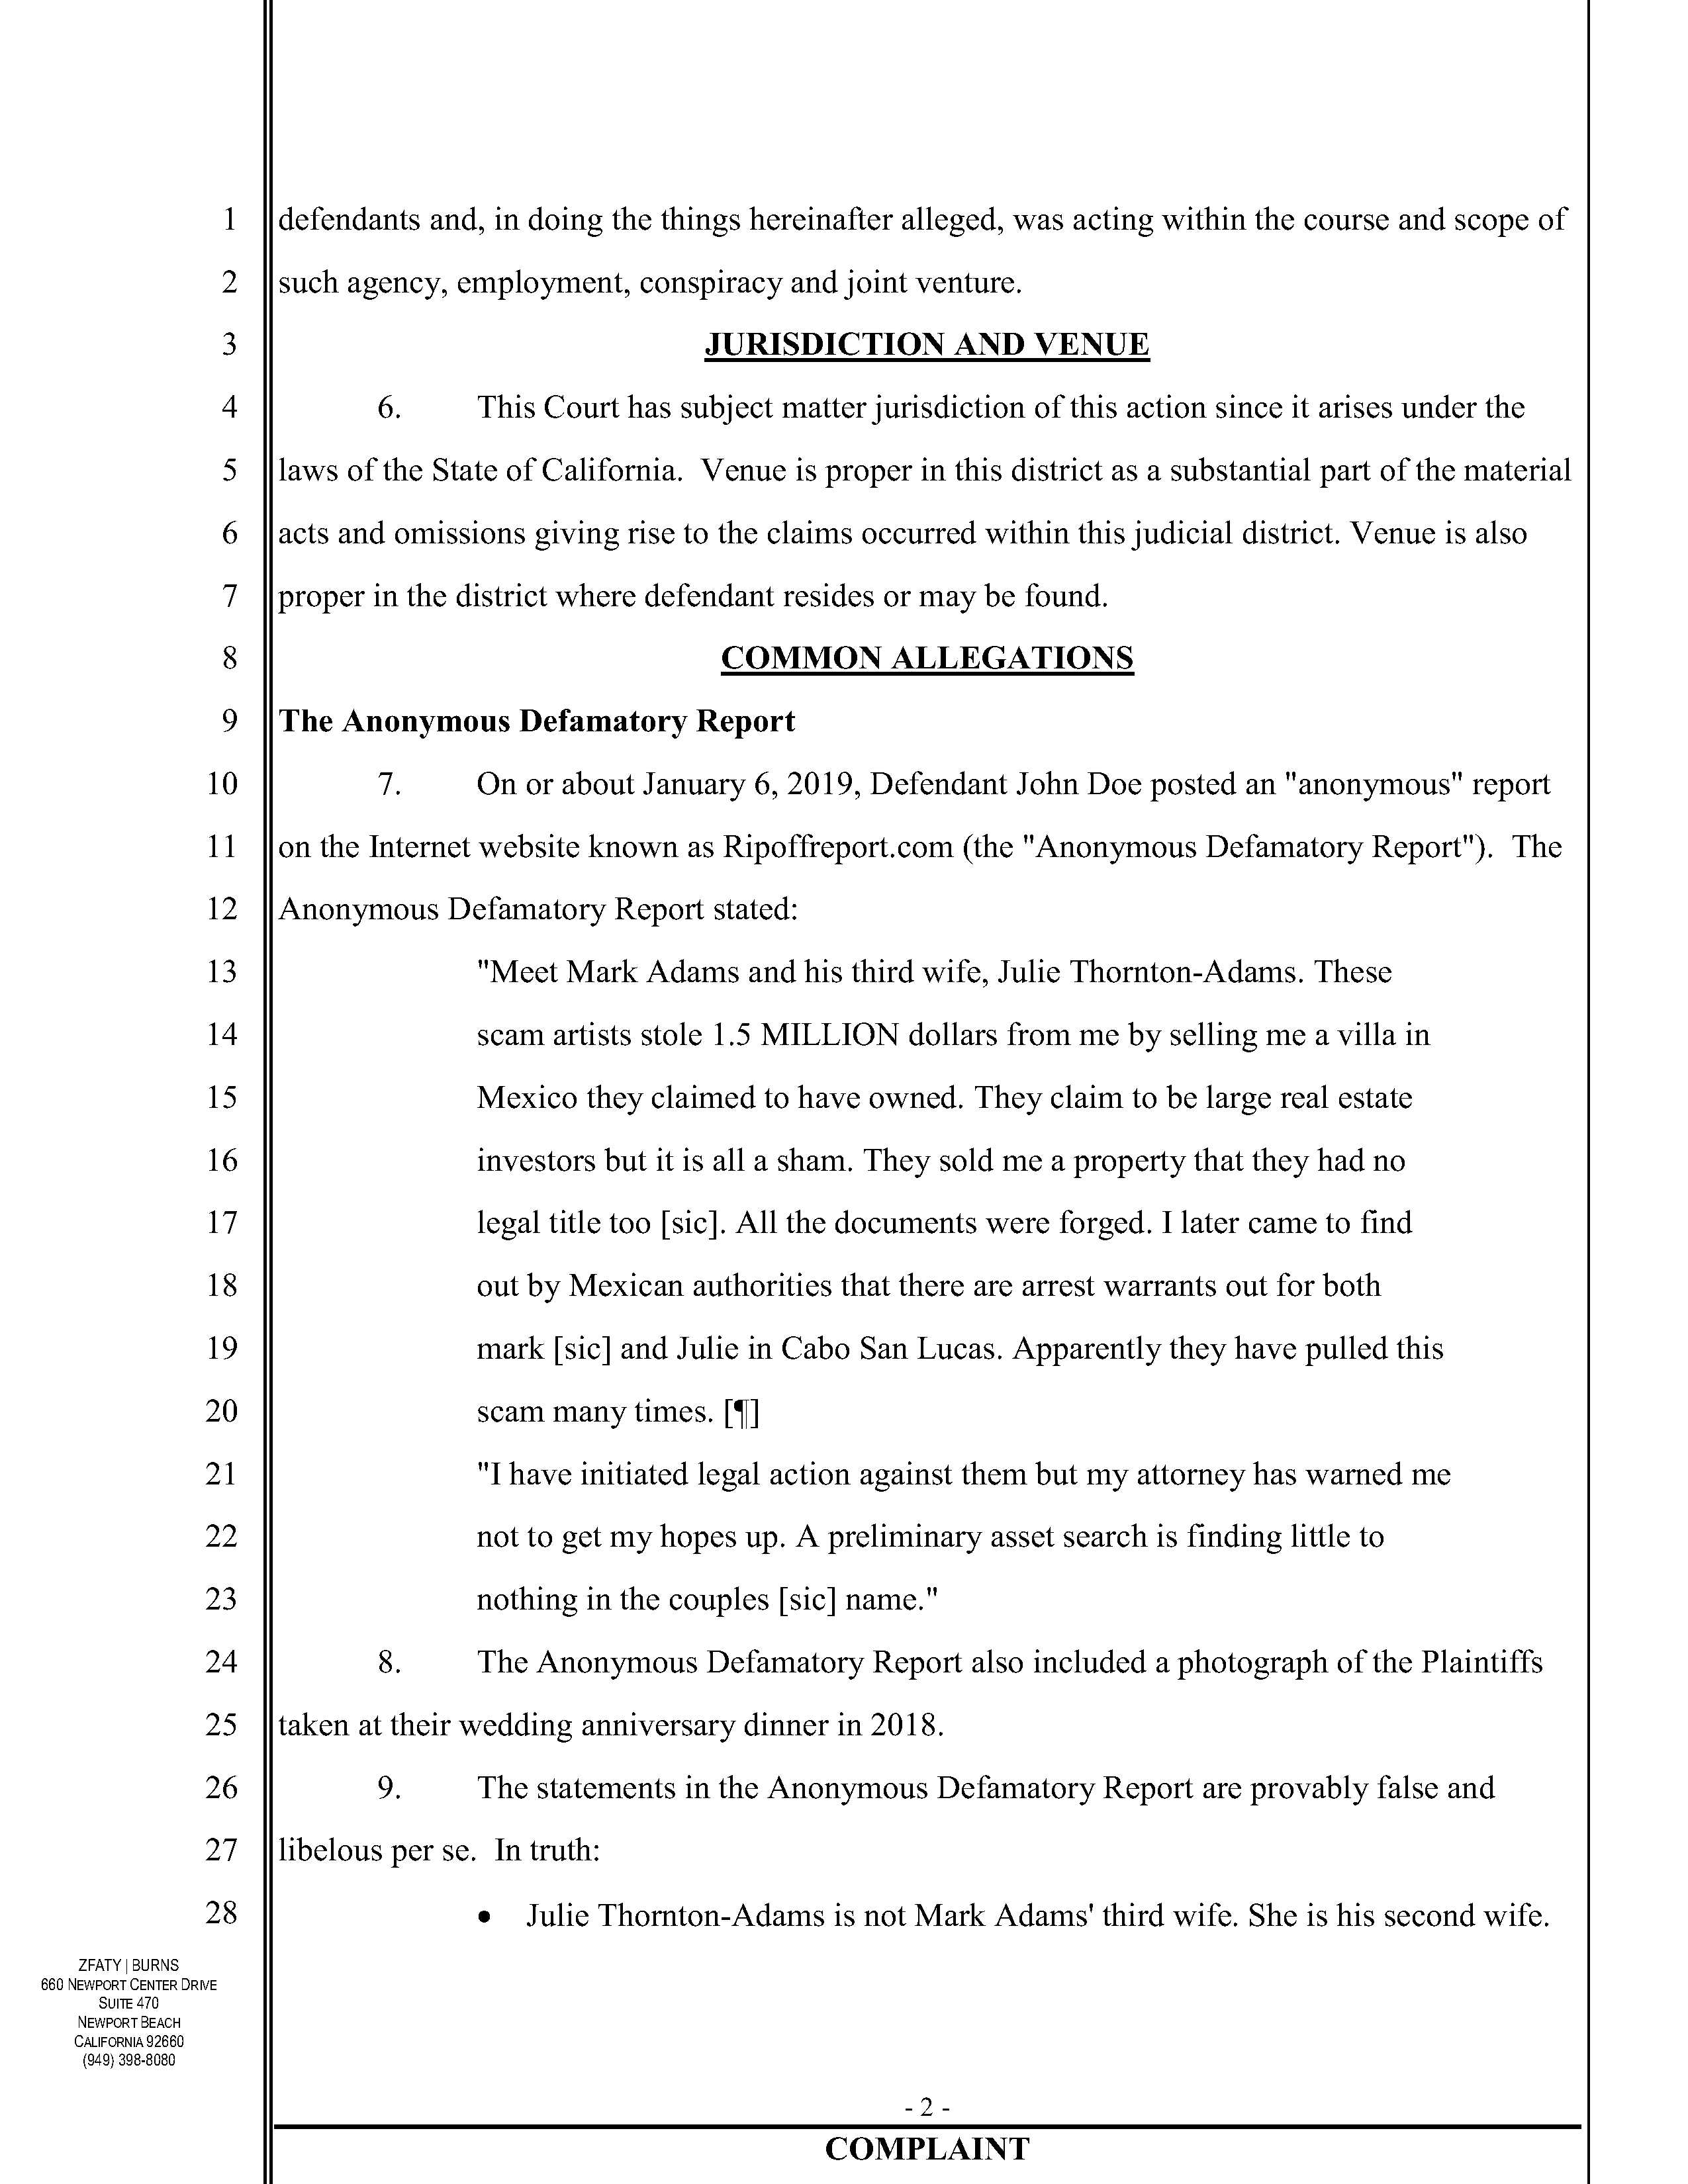 Court Conformed Copy of Complaint, page 3